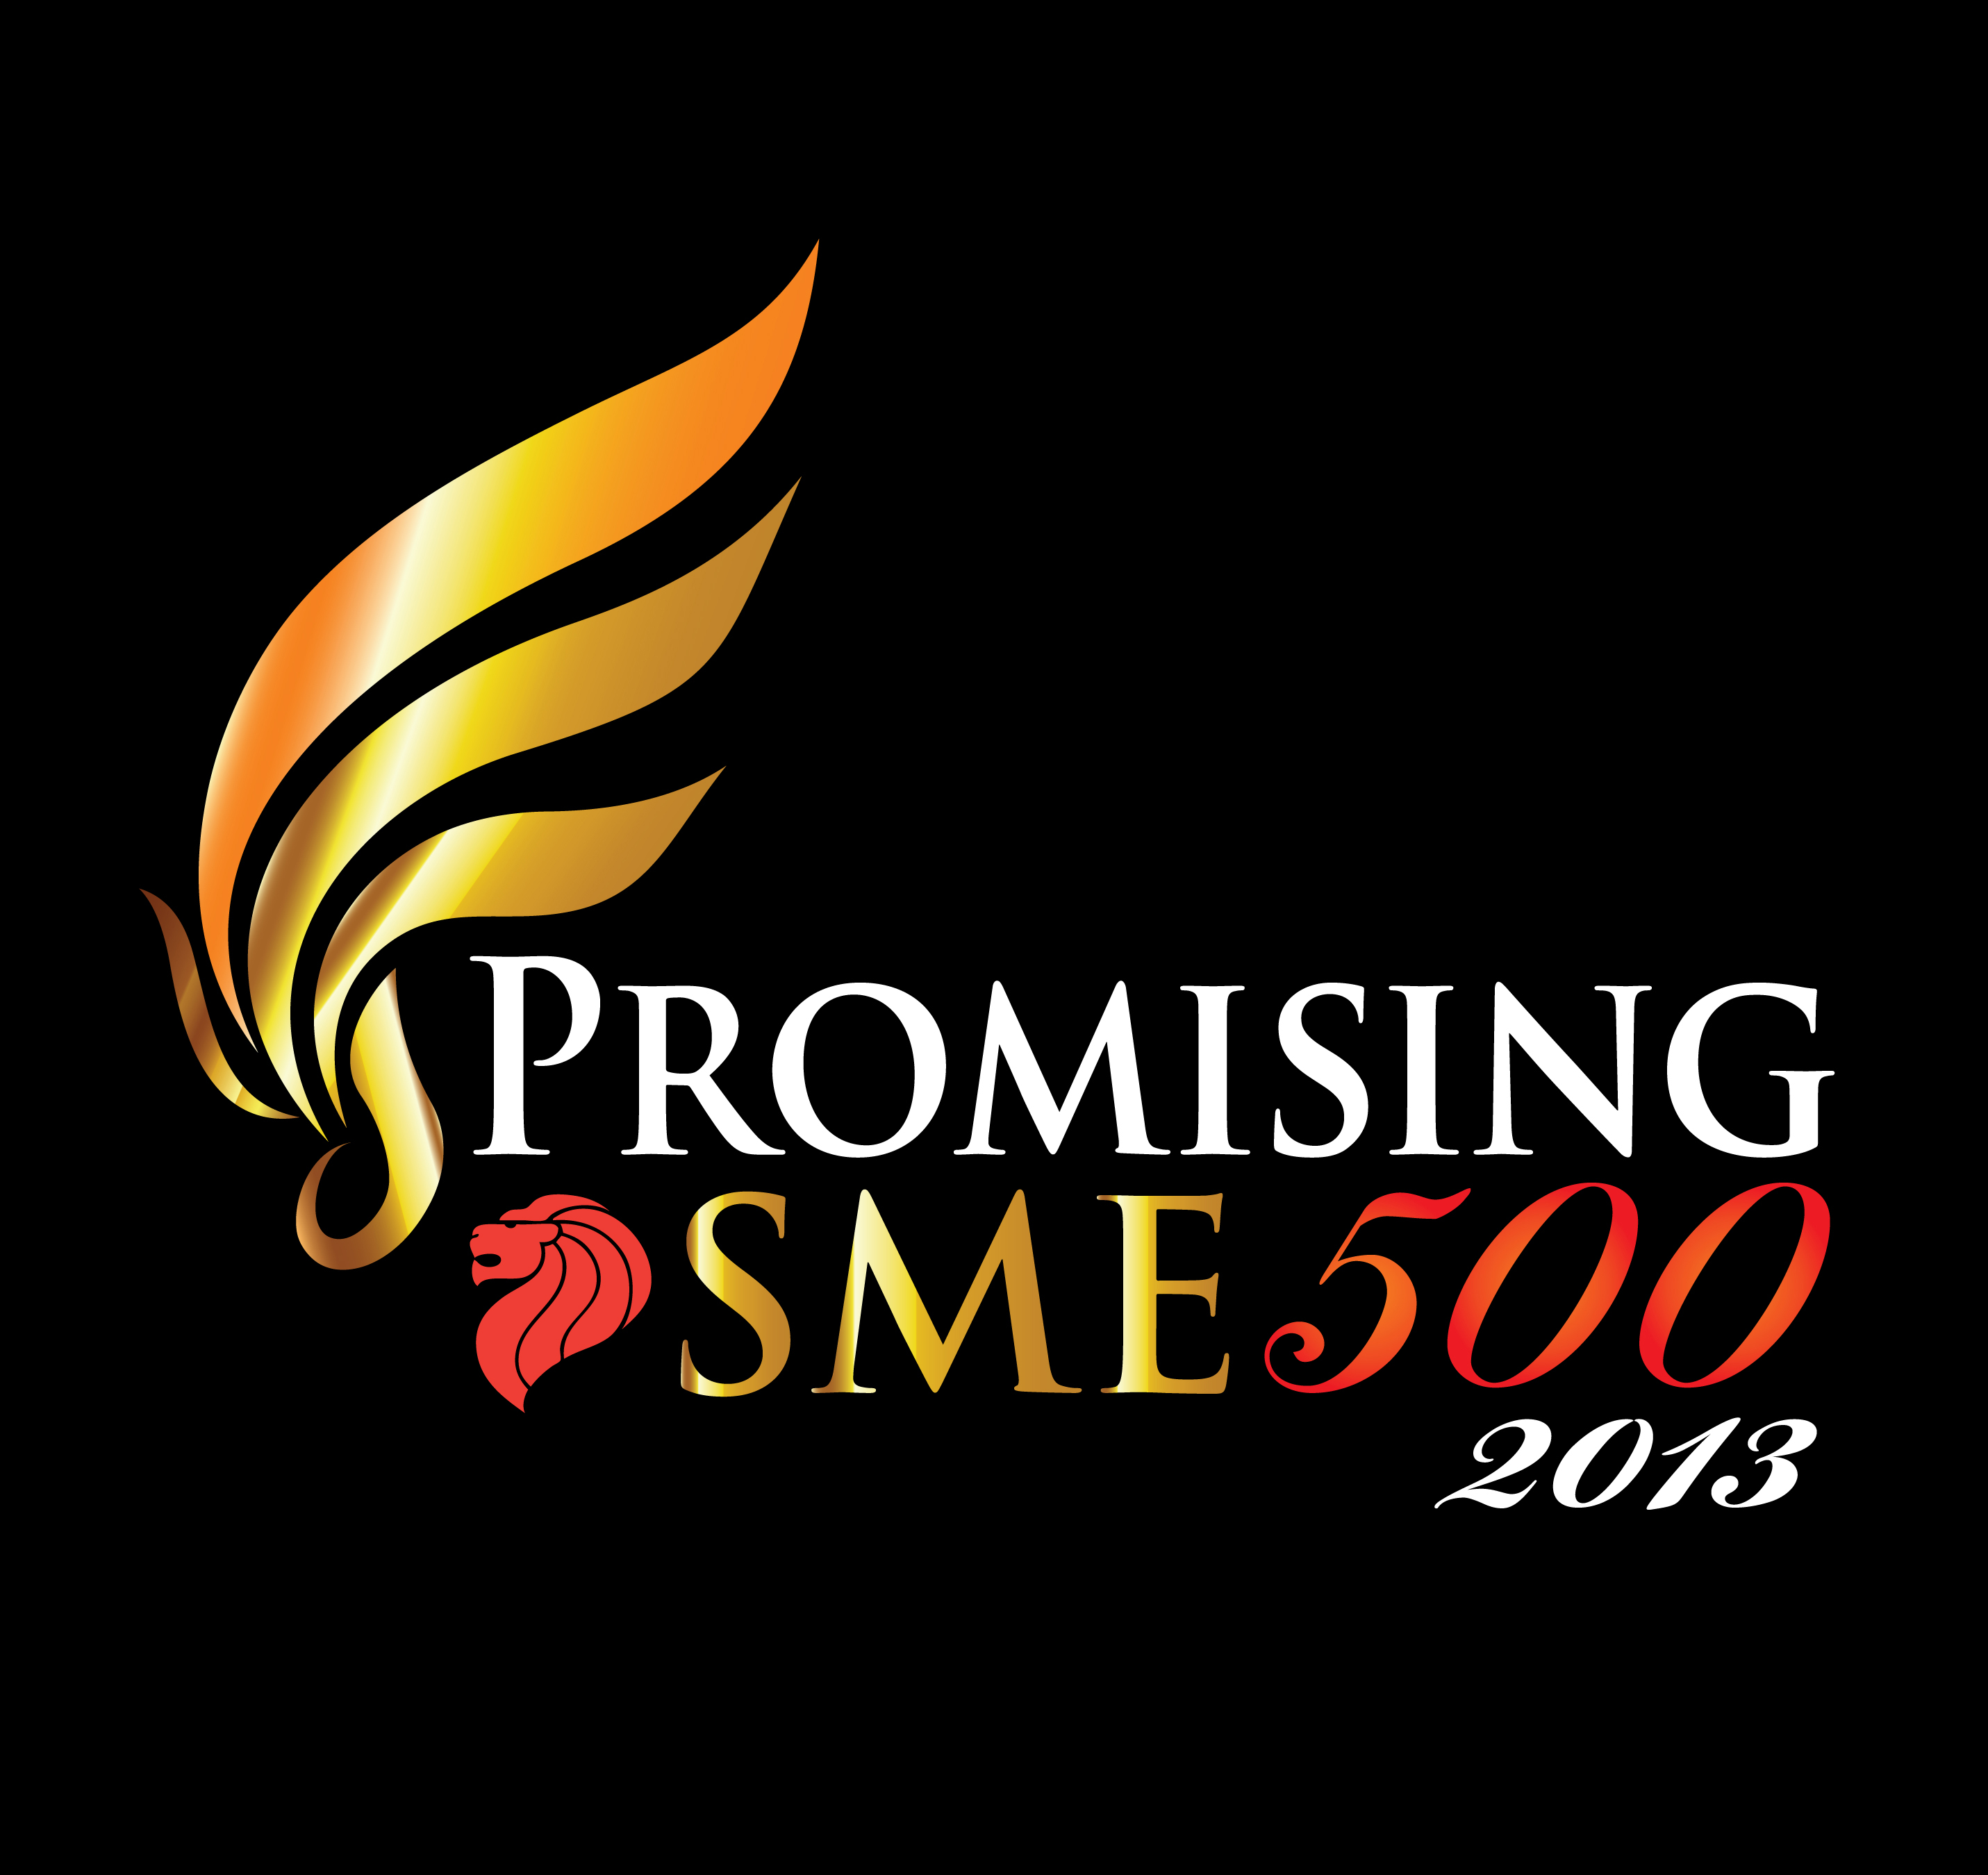 Singapore Promising SME500 in 2013